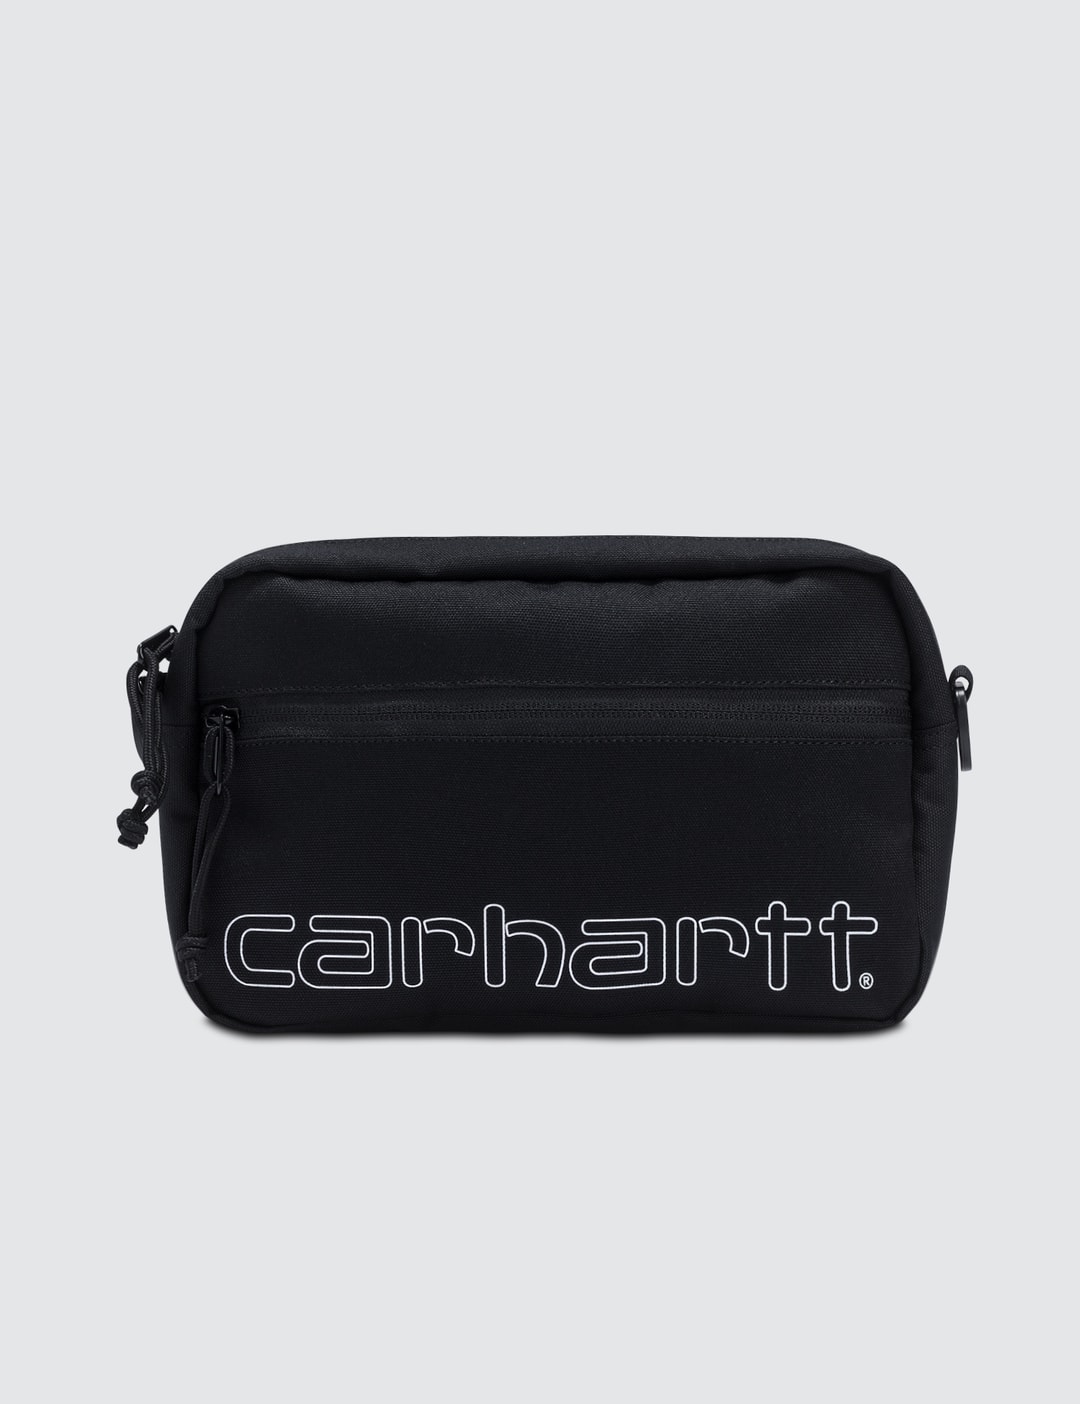 Carhartt In Progress - Team Script Bag HBX - ハイプビースト(Hypebeast)が厳選したグローバルファッション&ライフスタイル